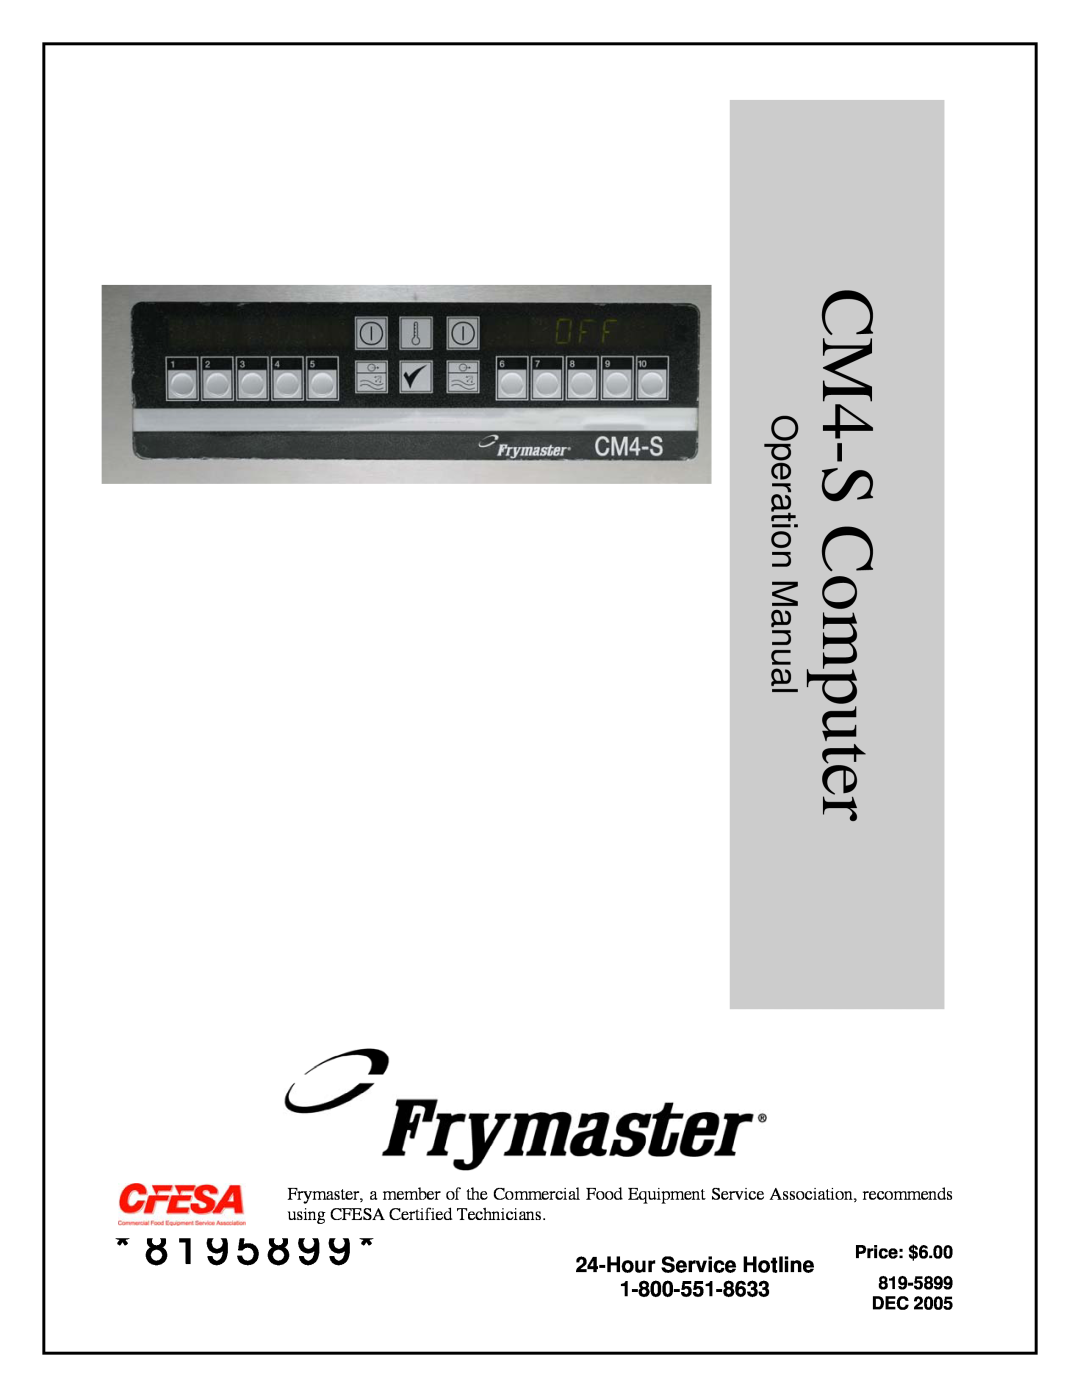 Frymaster cm45 s operation manual Hour Service Hotline, 8195899, 819-5899, Price $6.00 